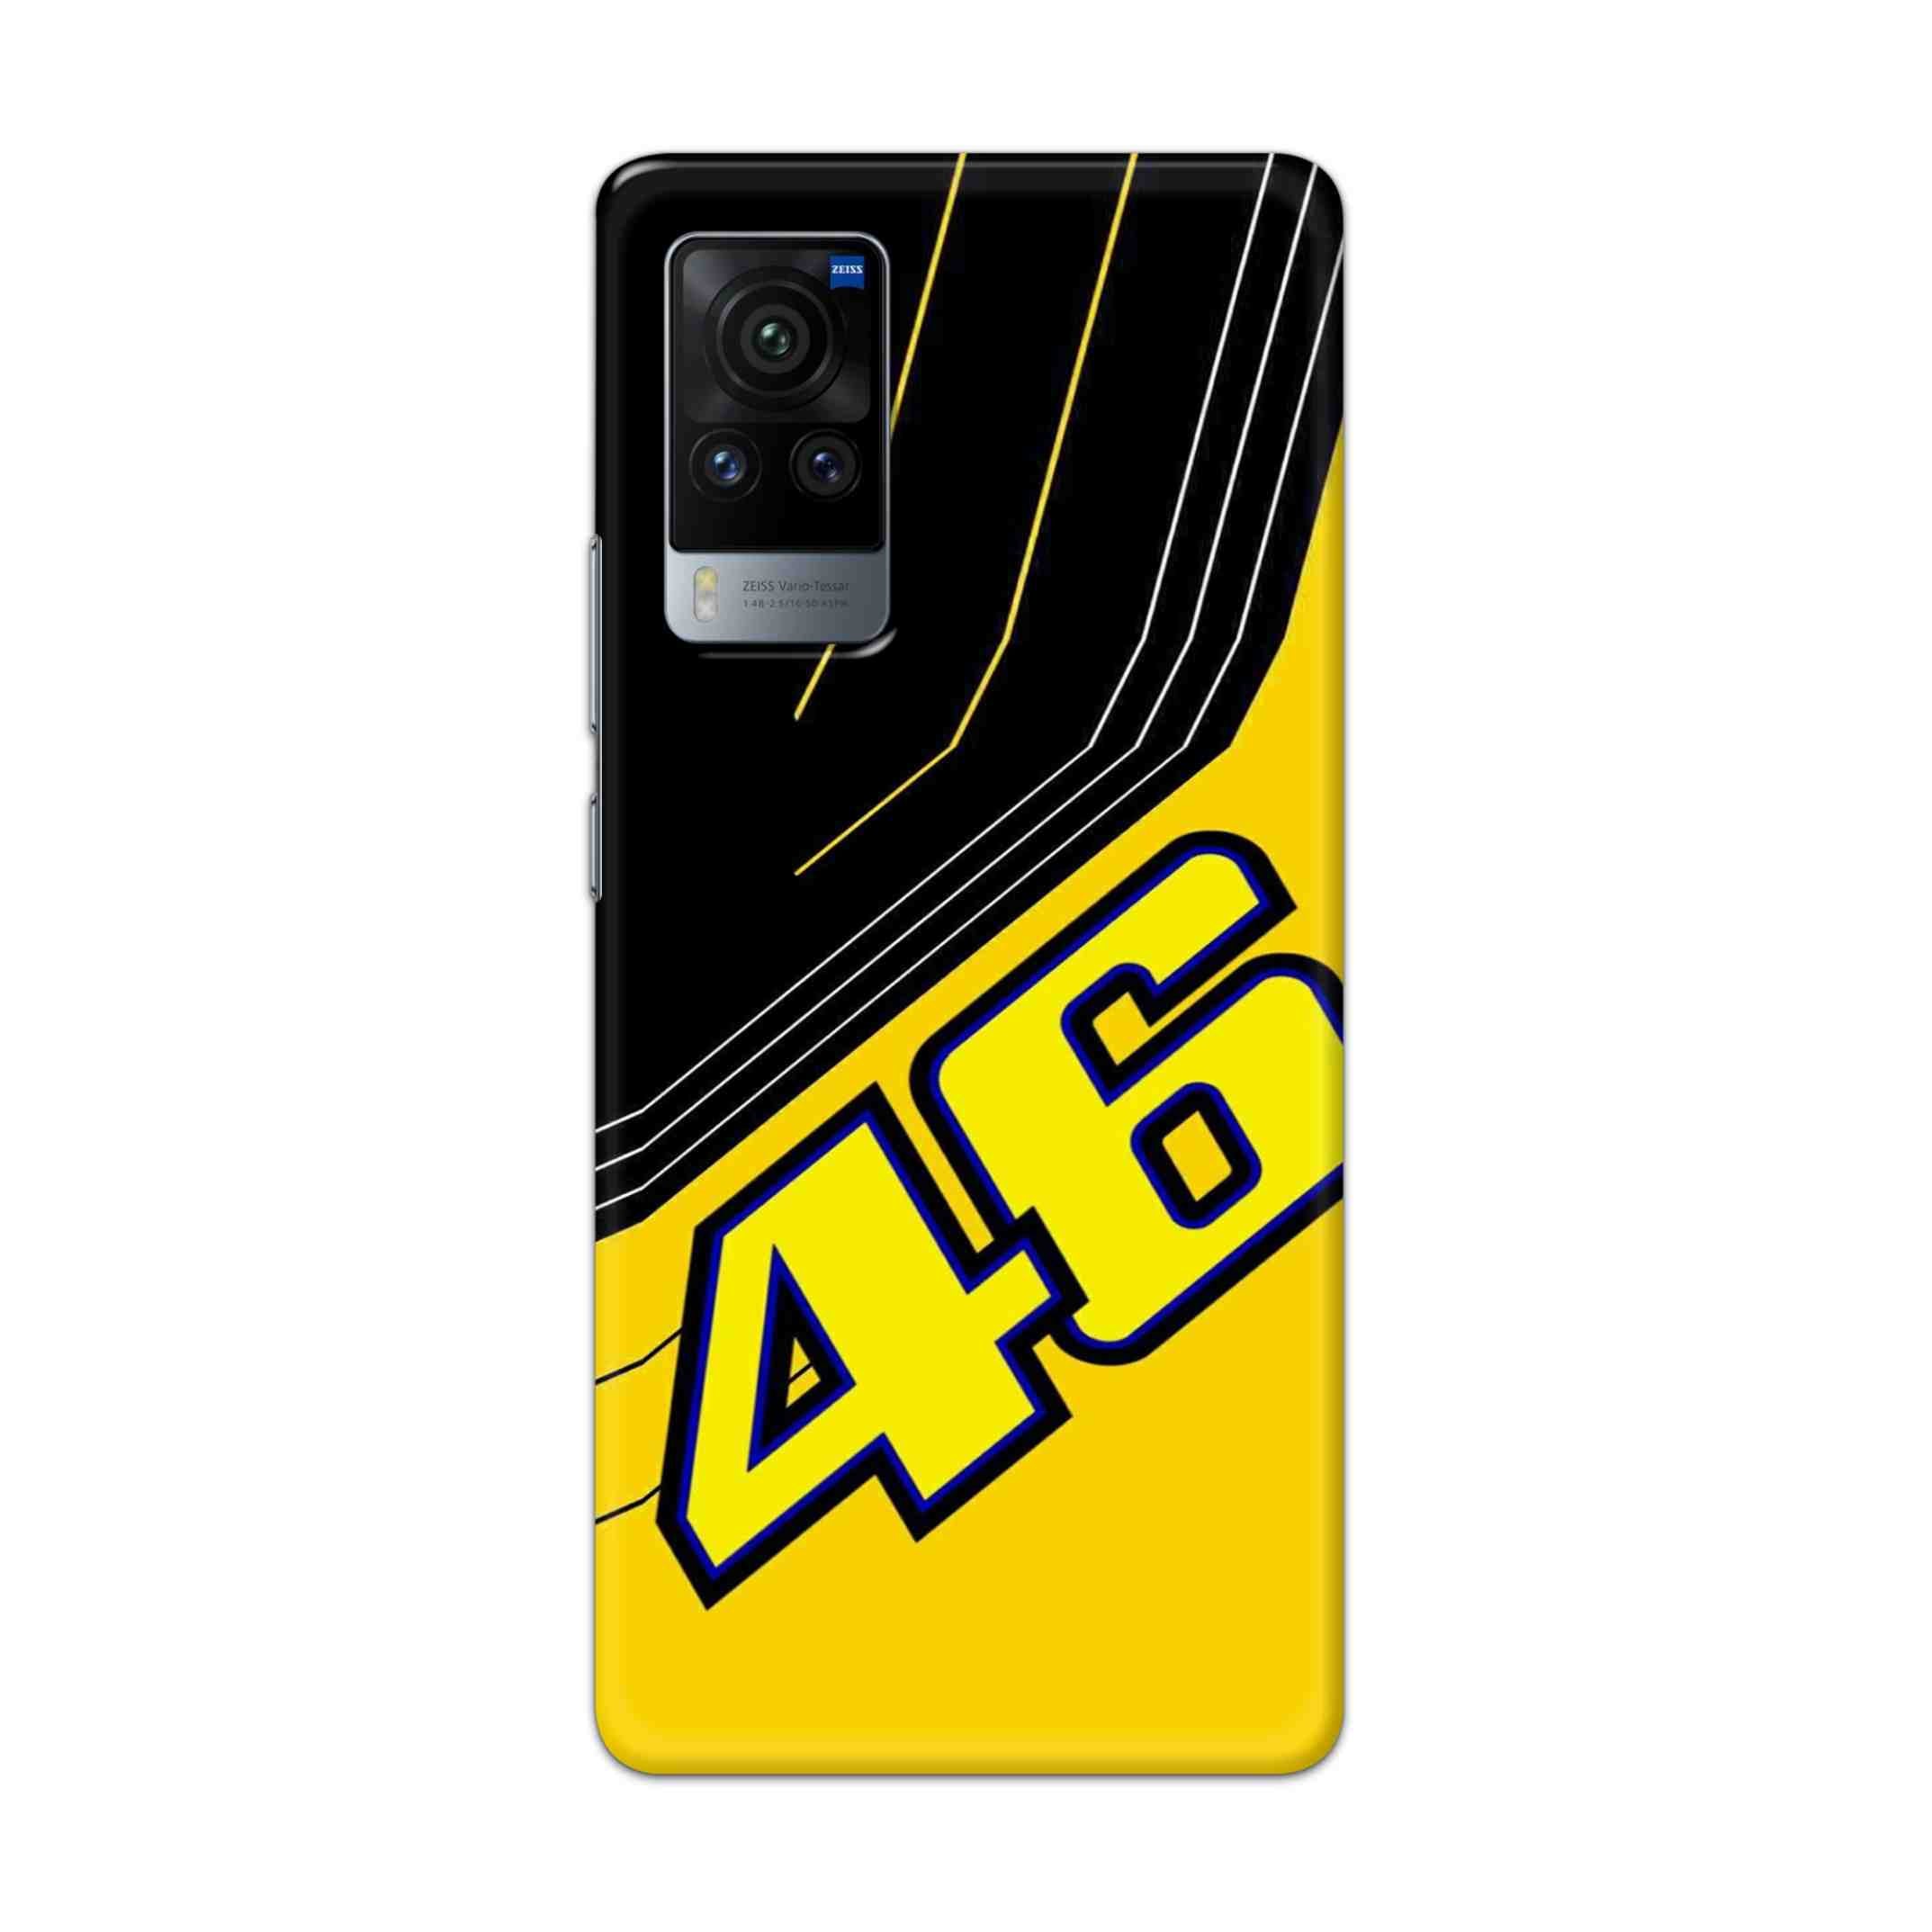 Buy 46 Hard Back Mobile Phone Case Cover For Vivo X60 Pro Online